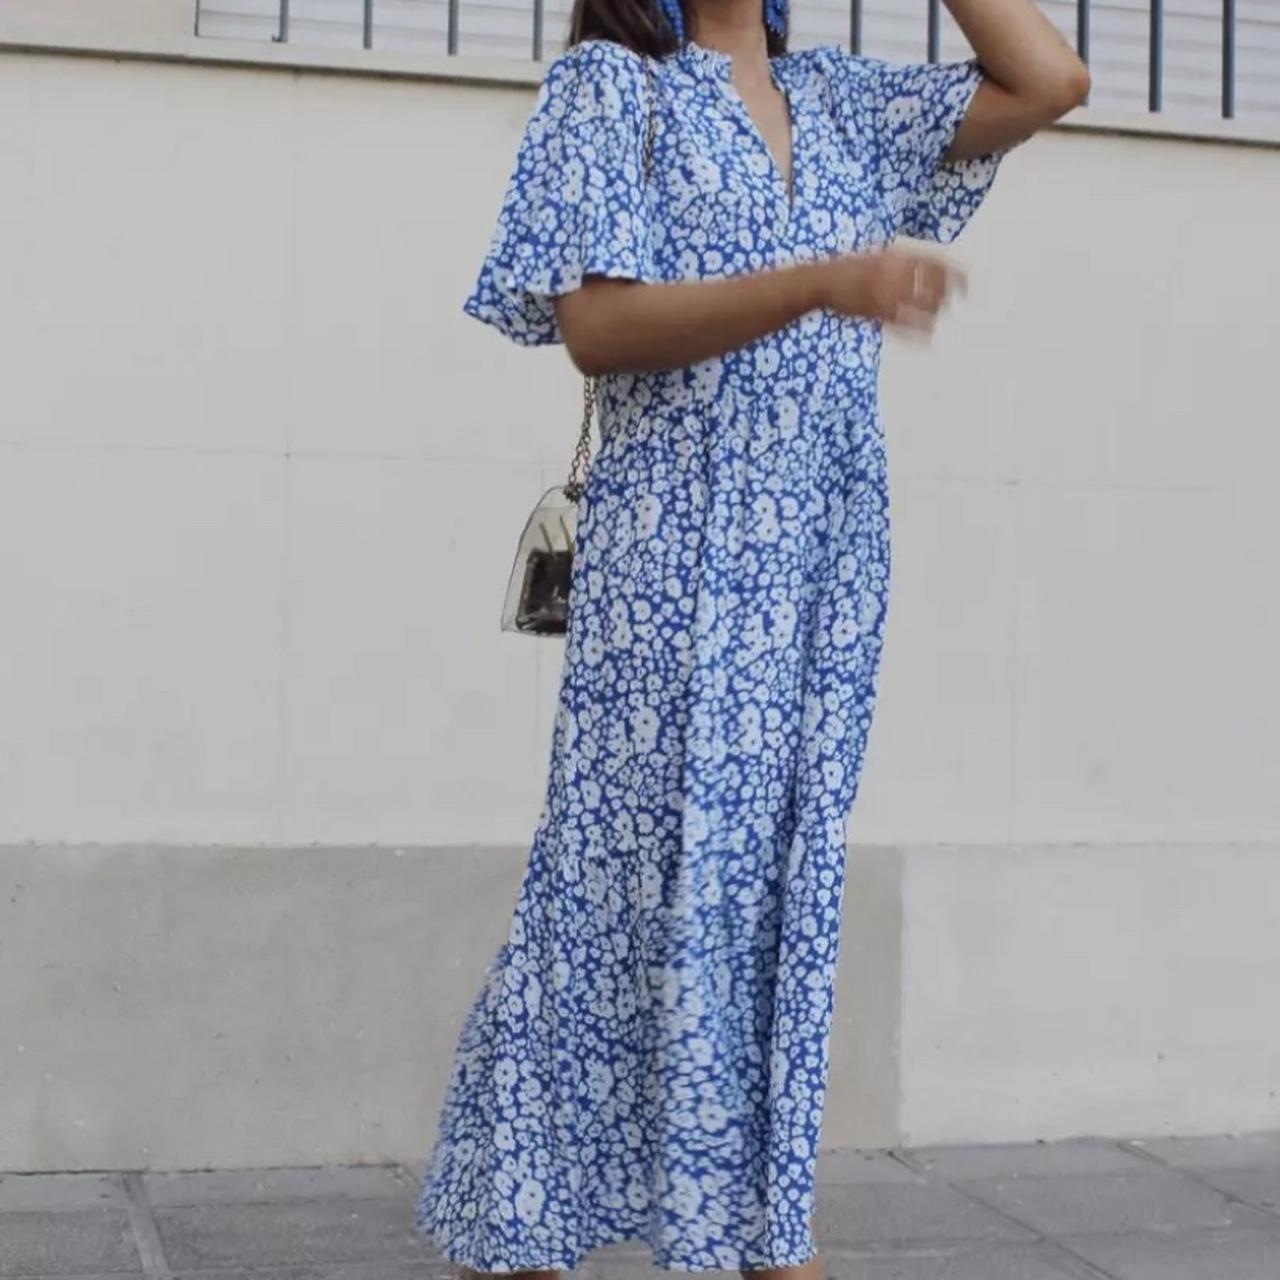 Zara Women's Blue and White Dress | Depop